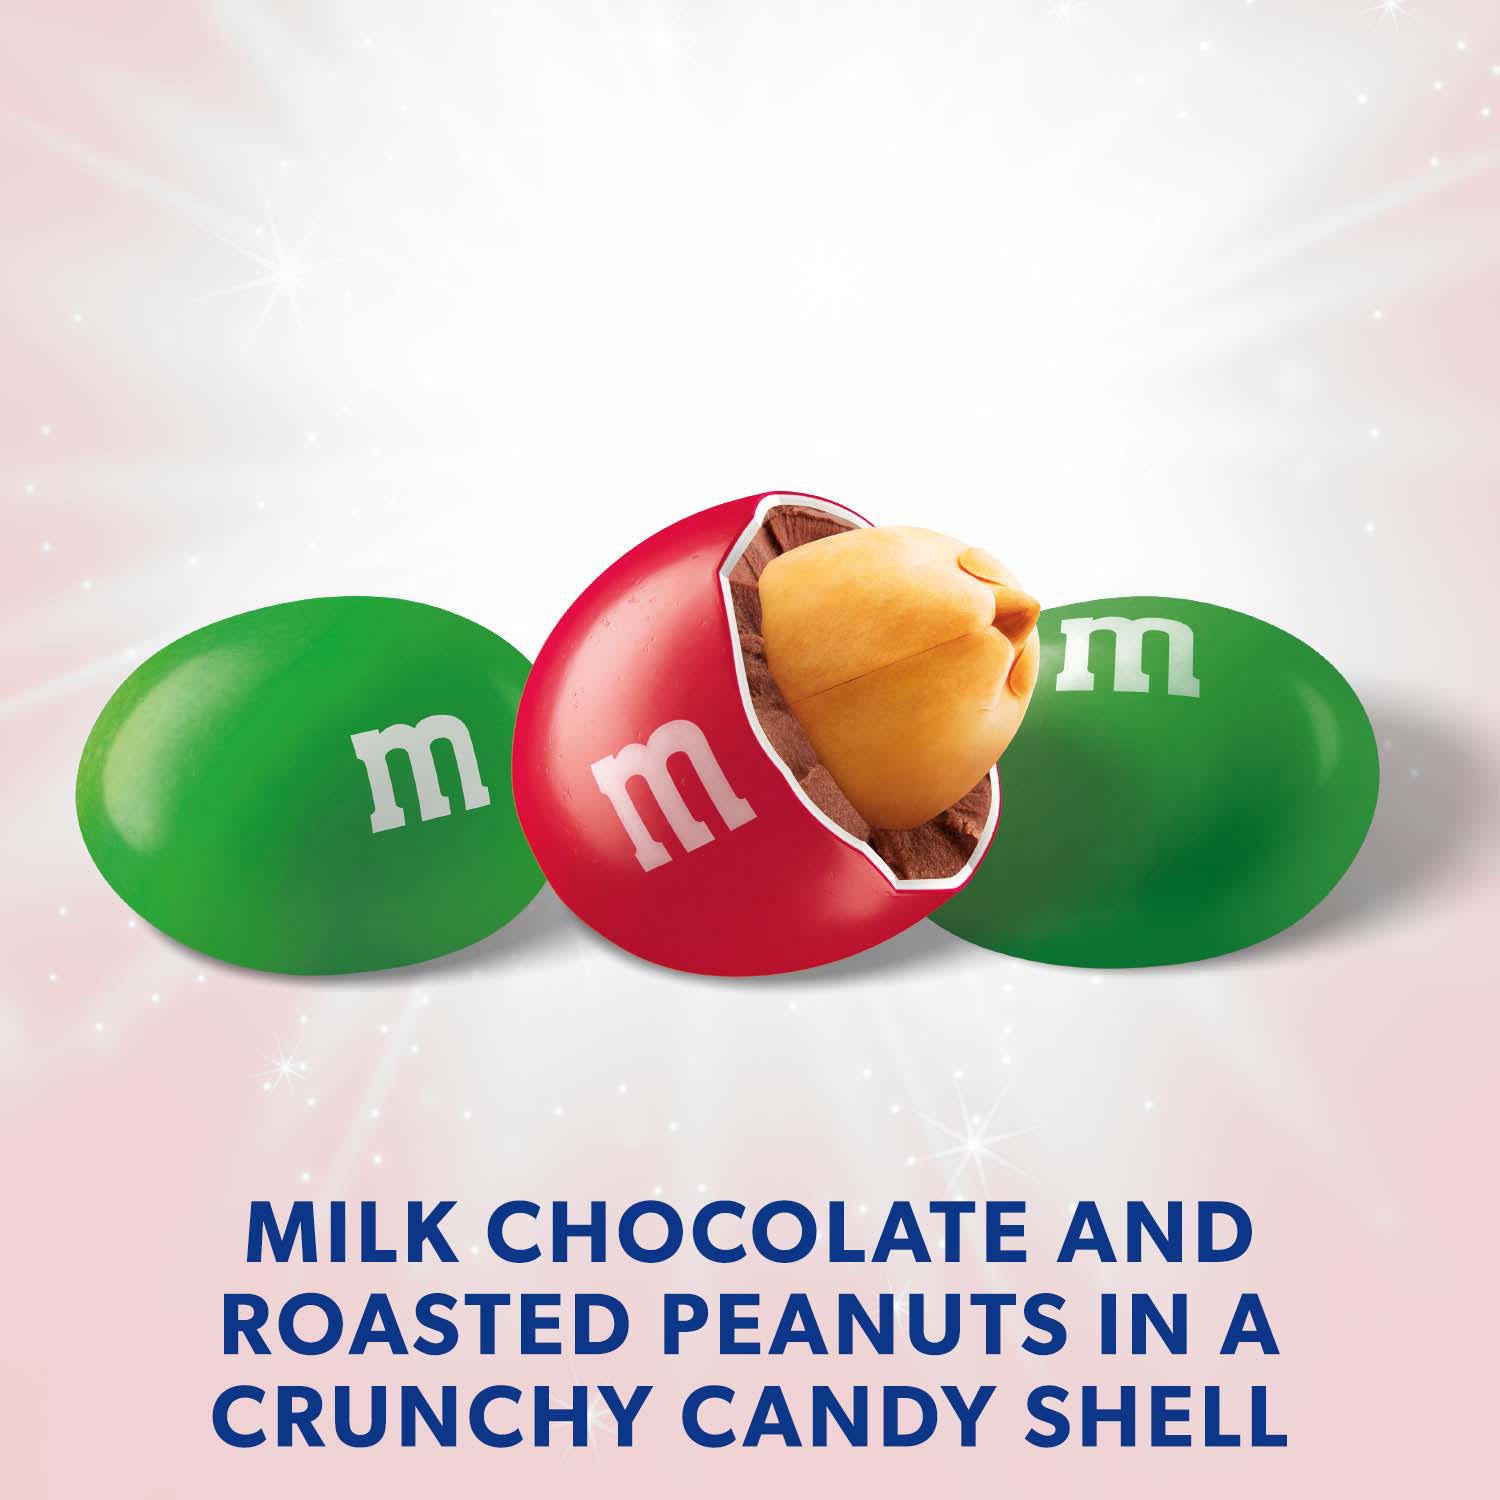 M&M's Chocolate Candy, Peanut, 62 Oz